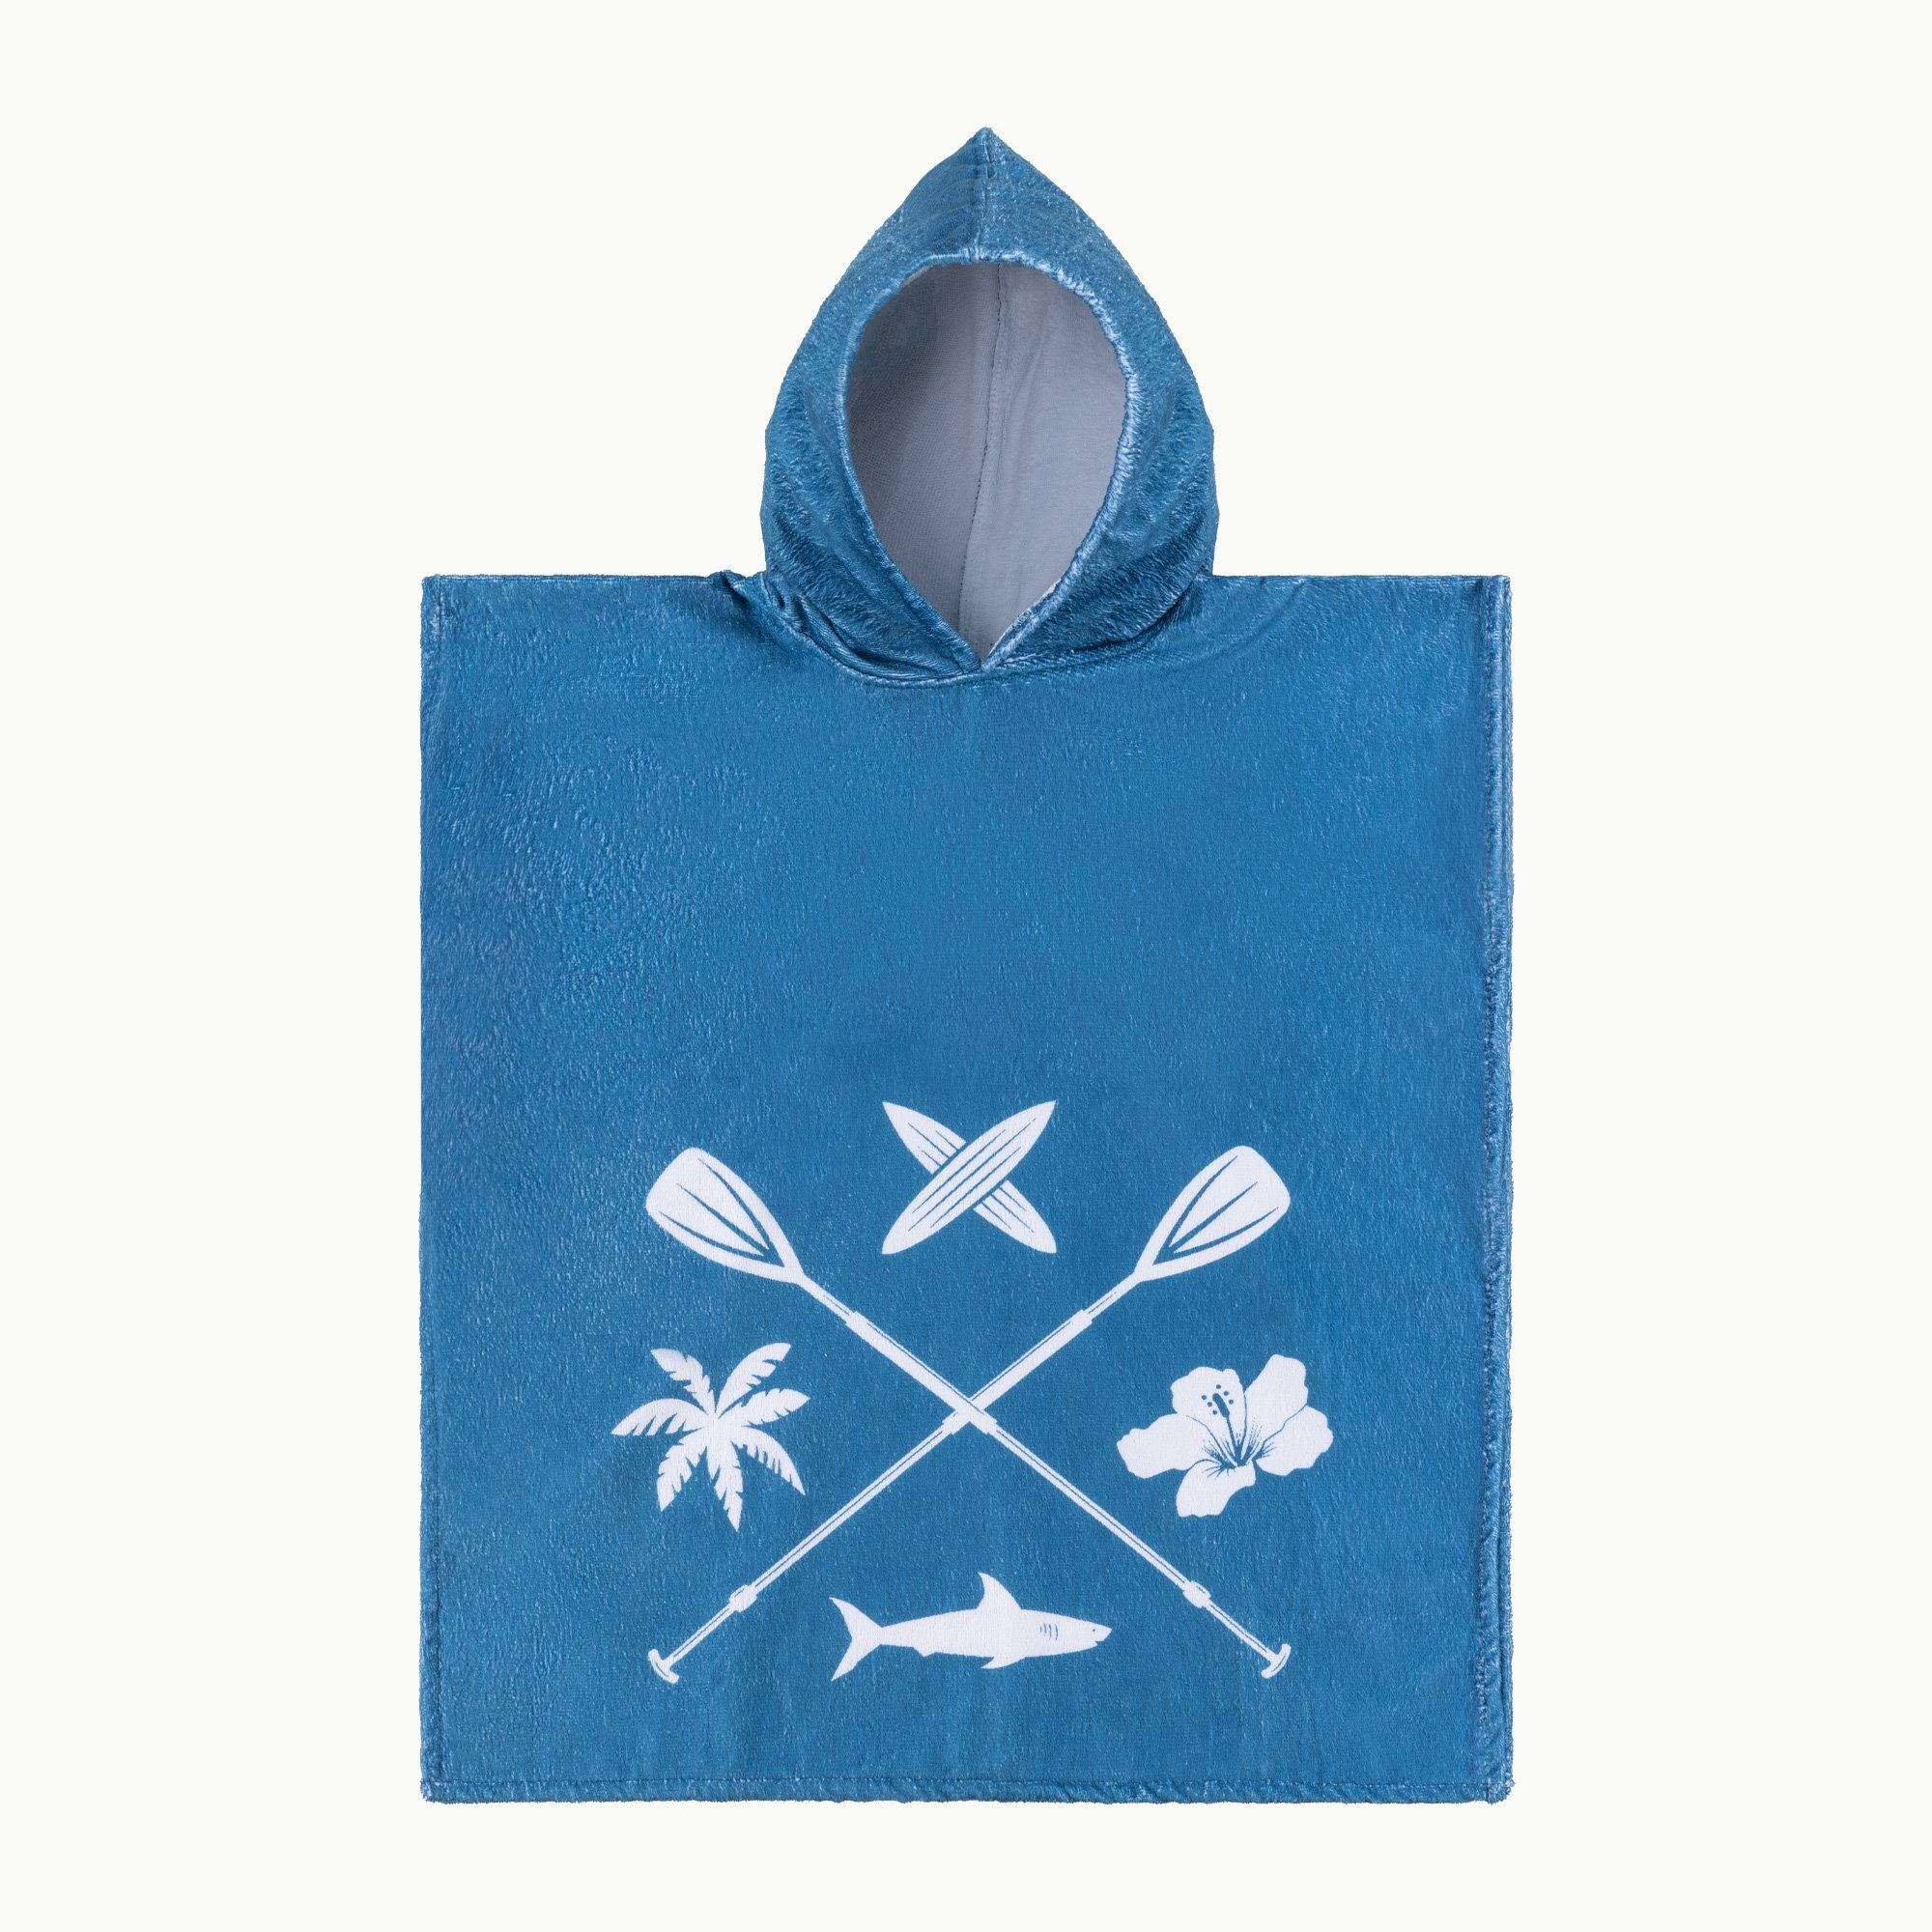 Handtuch Blau Poncho und Kinder - HOMELEVEL - Badeponcho Surfponcho, Baumwolle Kinderbademantel Baby